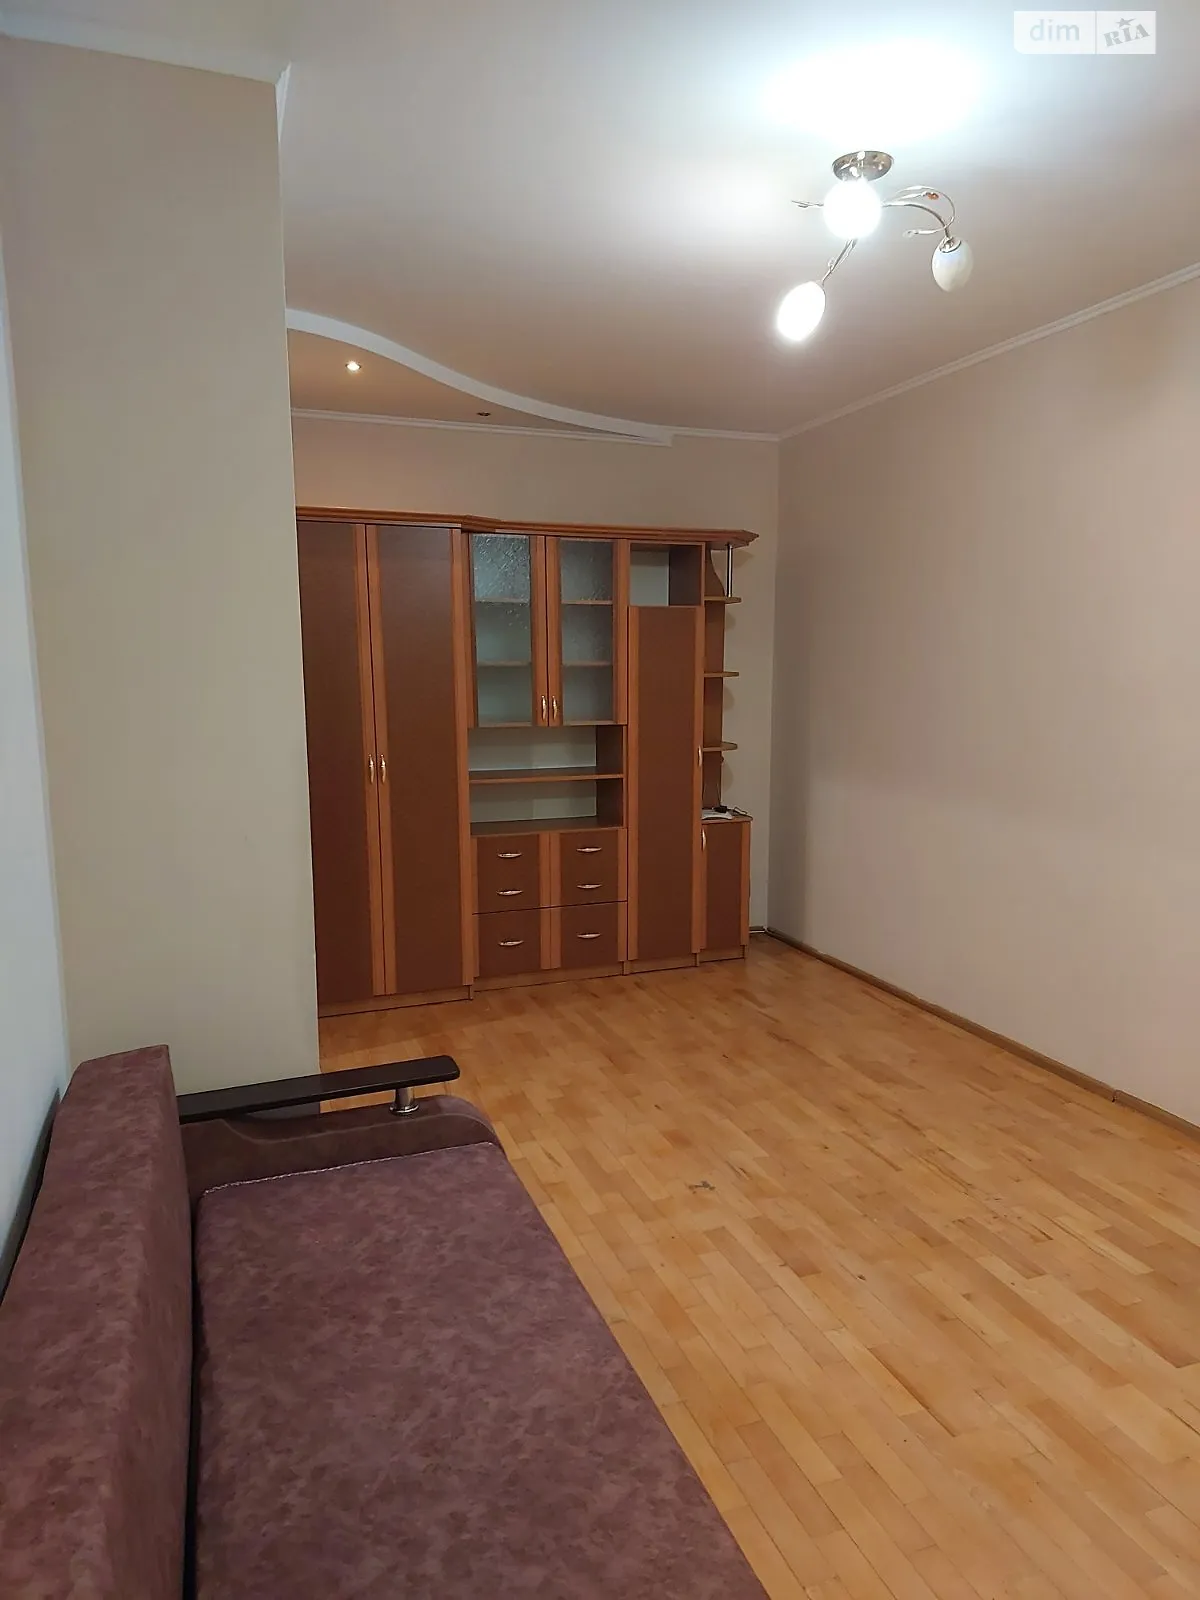 Сдается в аренду 1-комнатная квартира 40 кв. м в Ивано-Франковске - фото 3